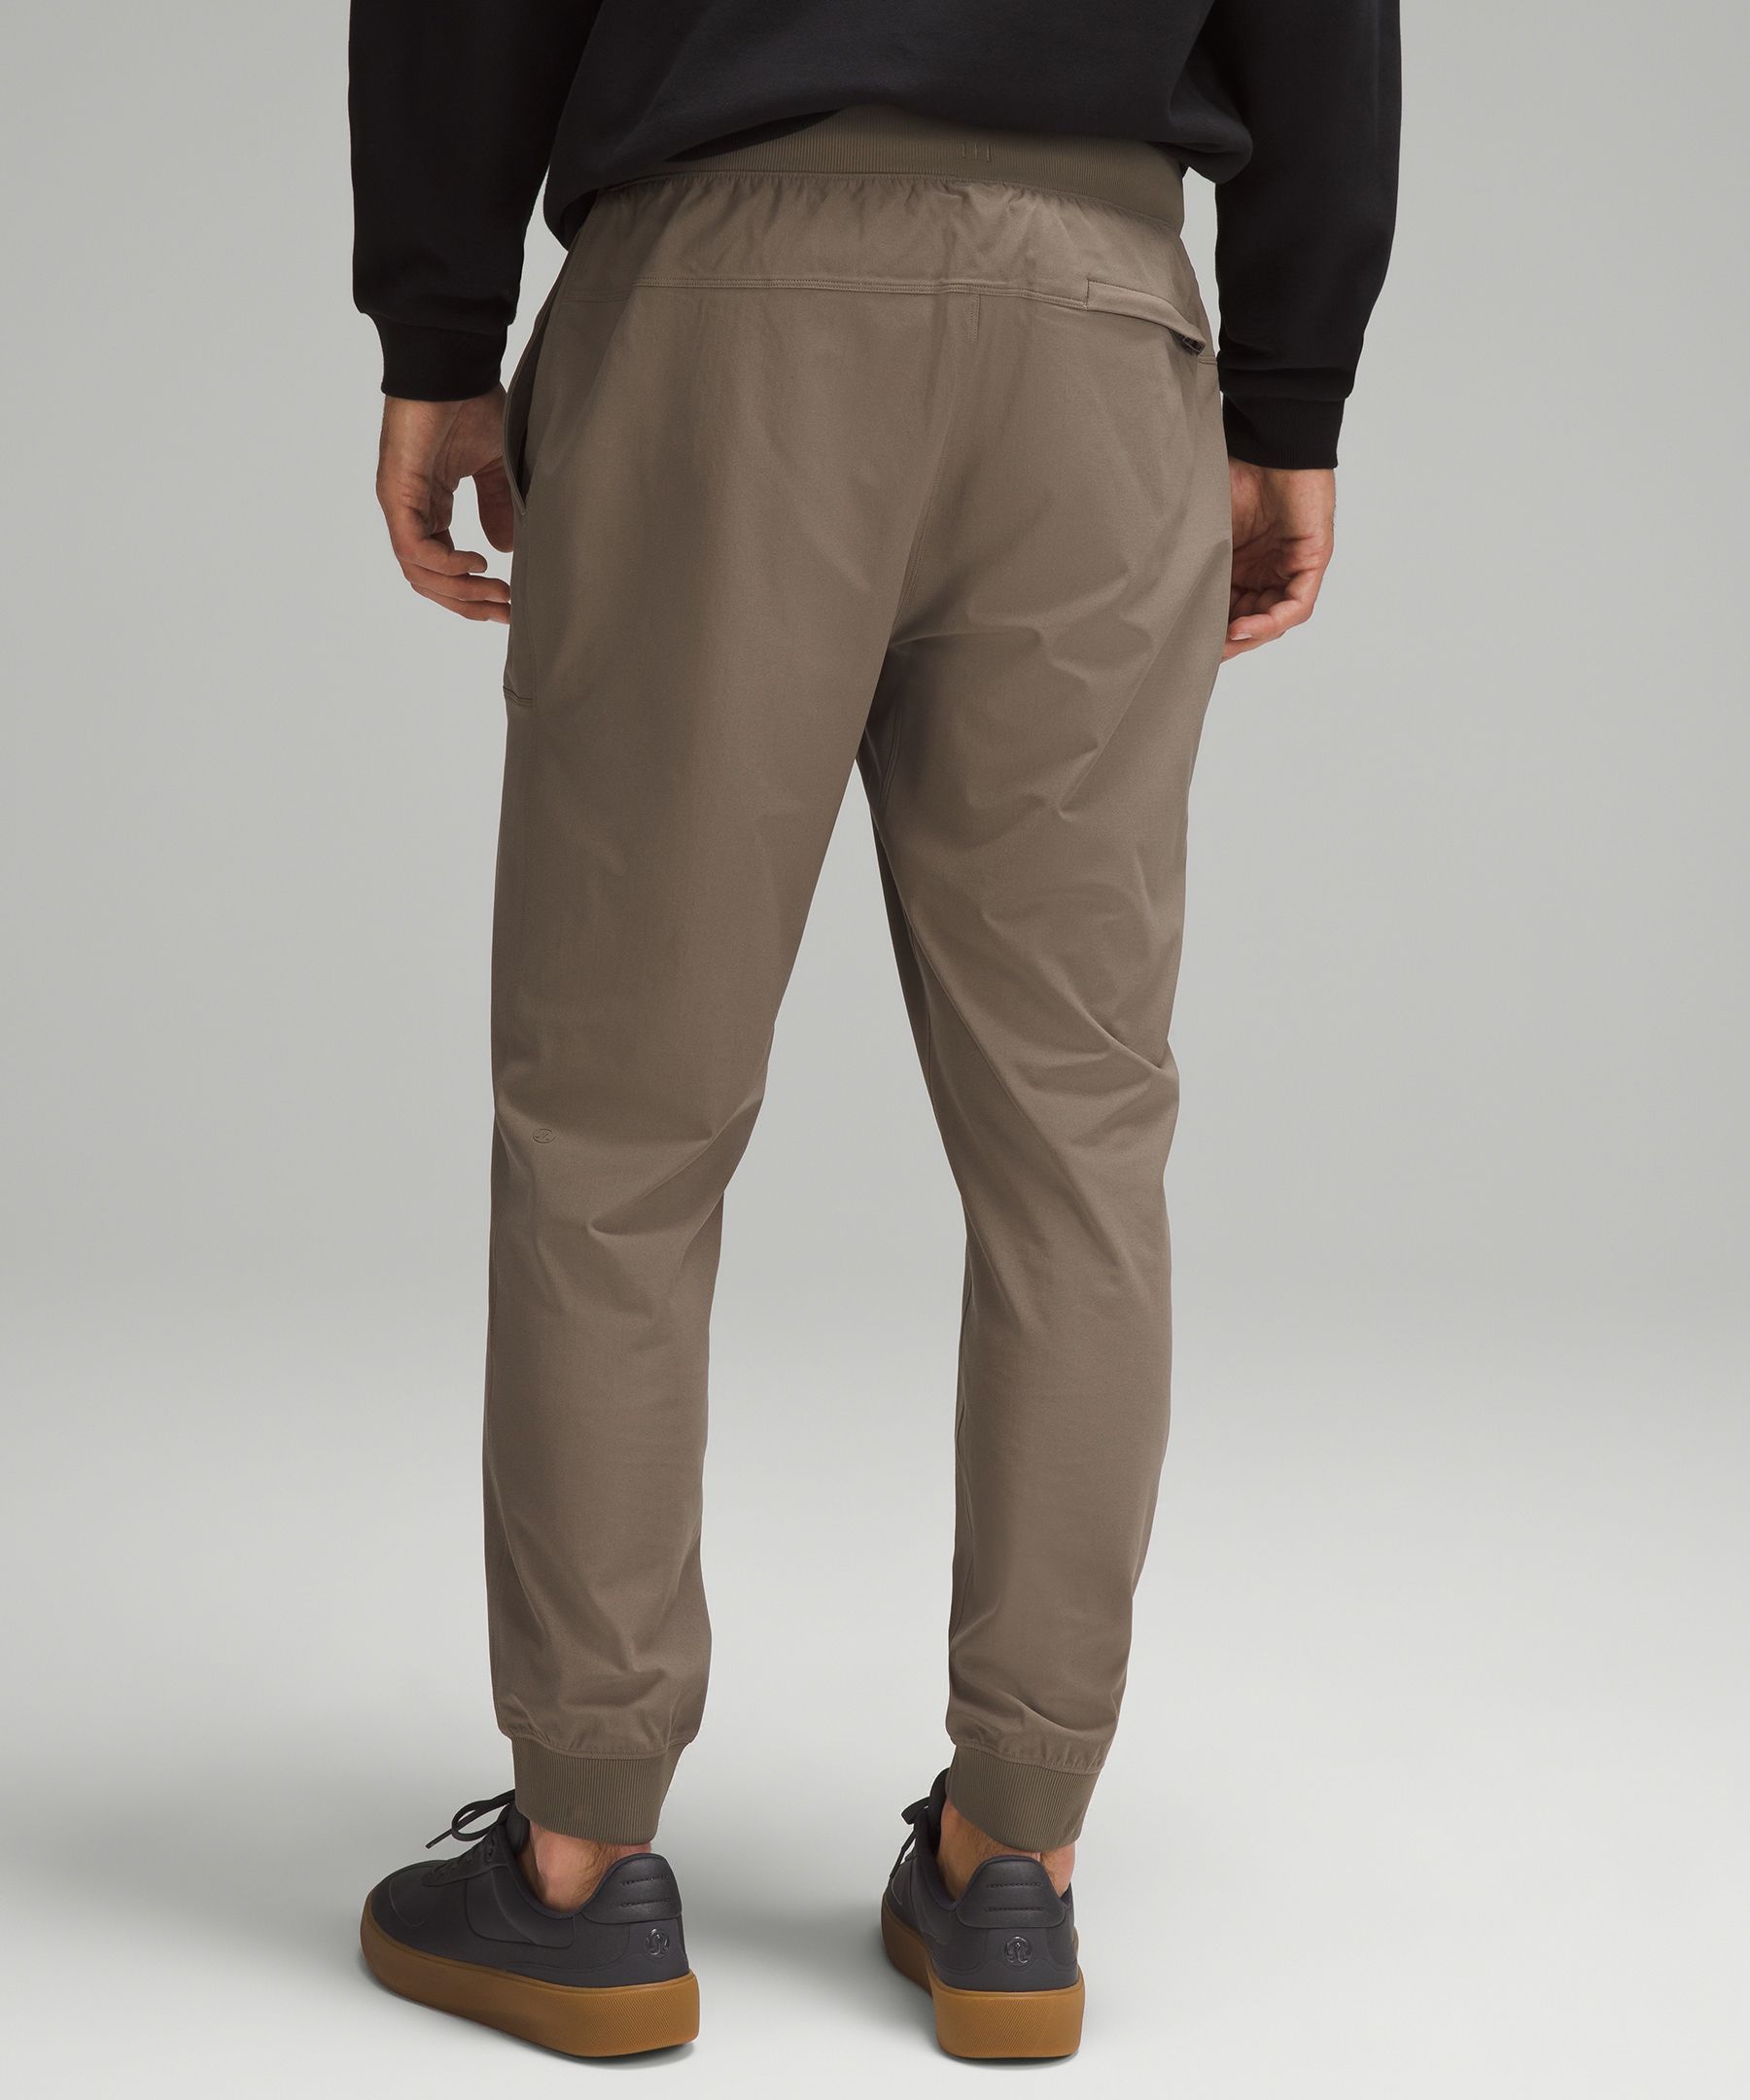 Introducing NEW ABC jogger pants! : r/Lululemen